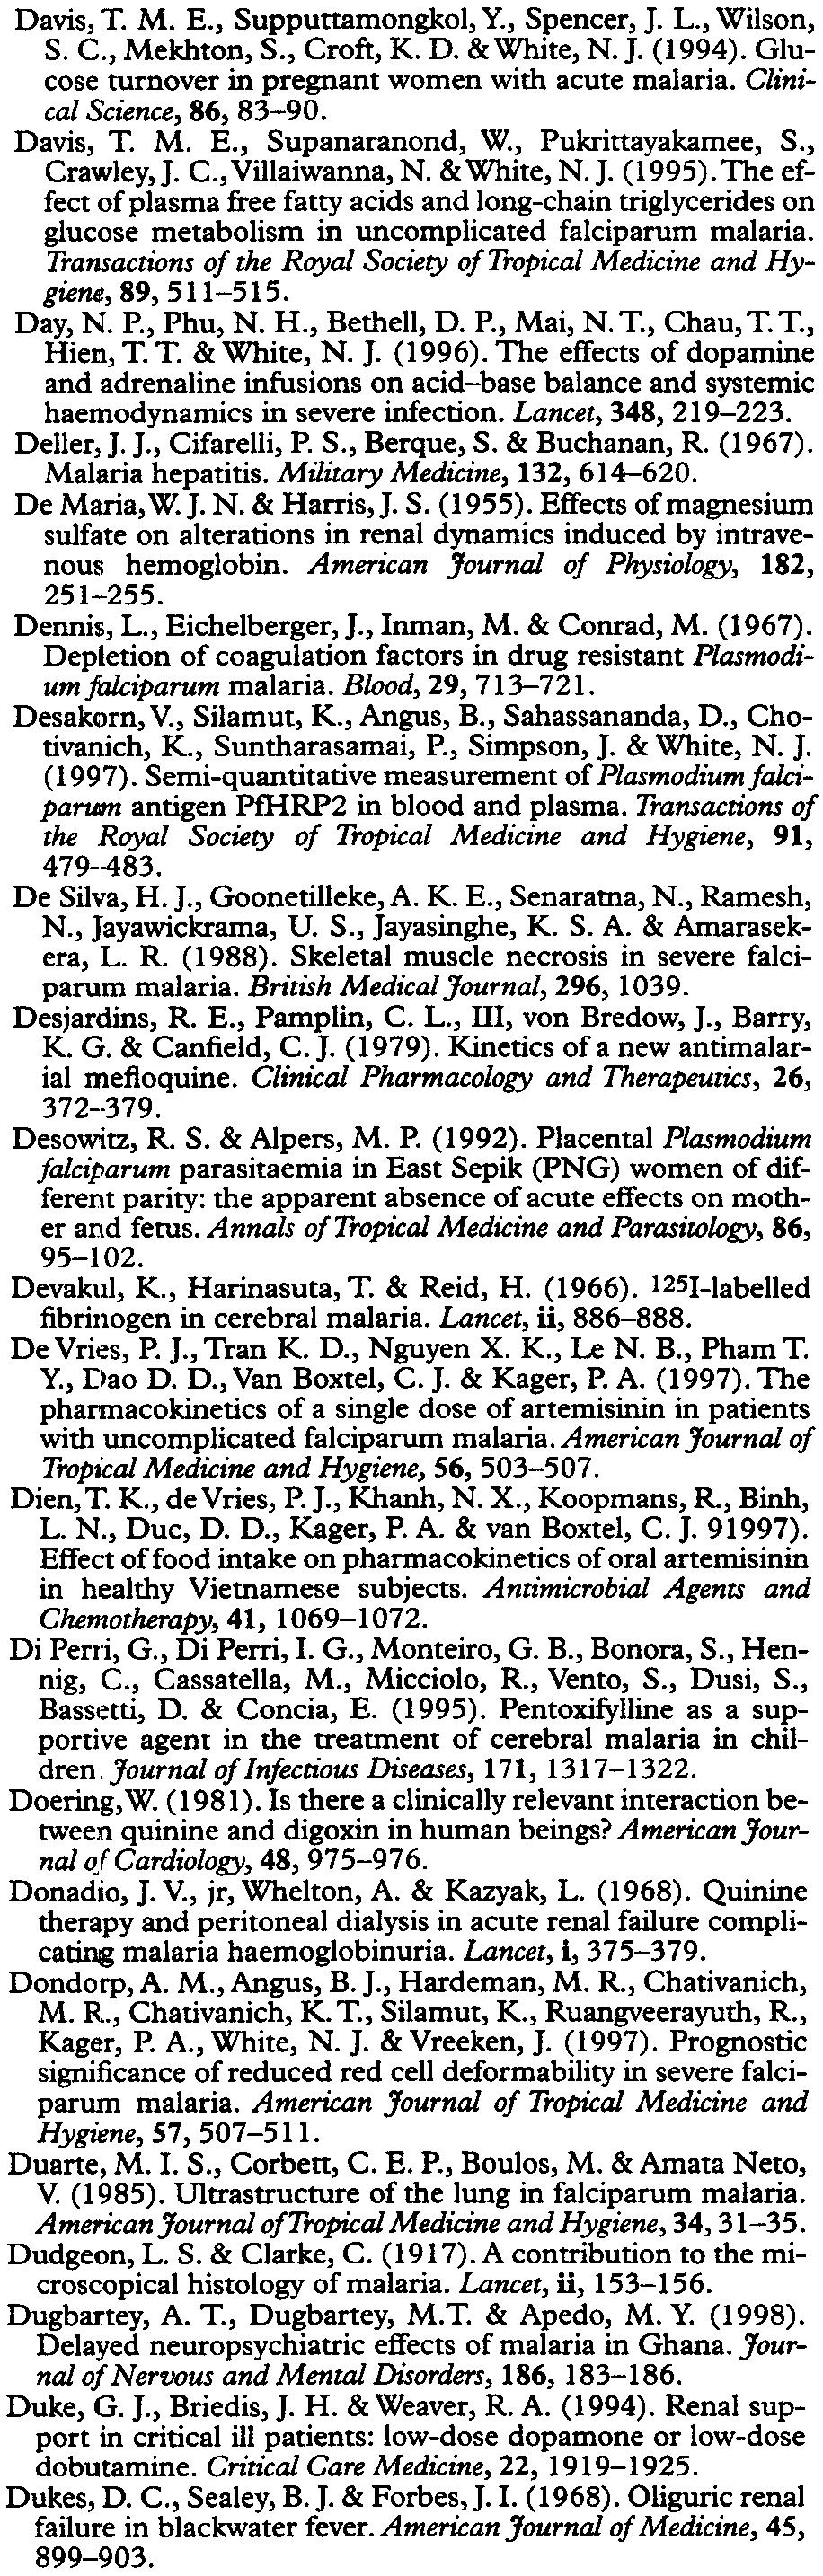 TRANSACTIONS OFnlE ROYAL SOCIETY OF TROPICAL MEDICINE AND HYGIENE (2000) 94, SUPPLEMENT 51/77 Davis, T. M. E., Supputtamongkol, Y., Spencer, I. L., Wilson, S. C., Mekhton, S., Croft, K. D. & White, N.